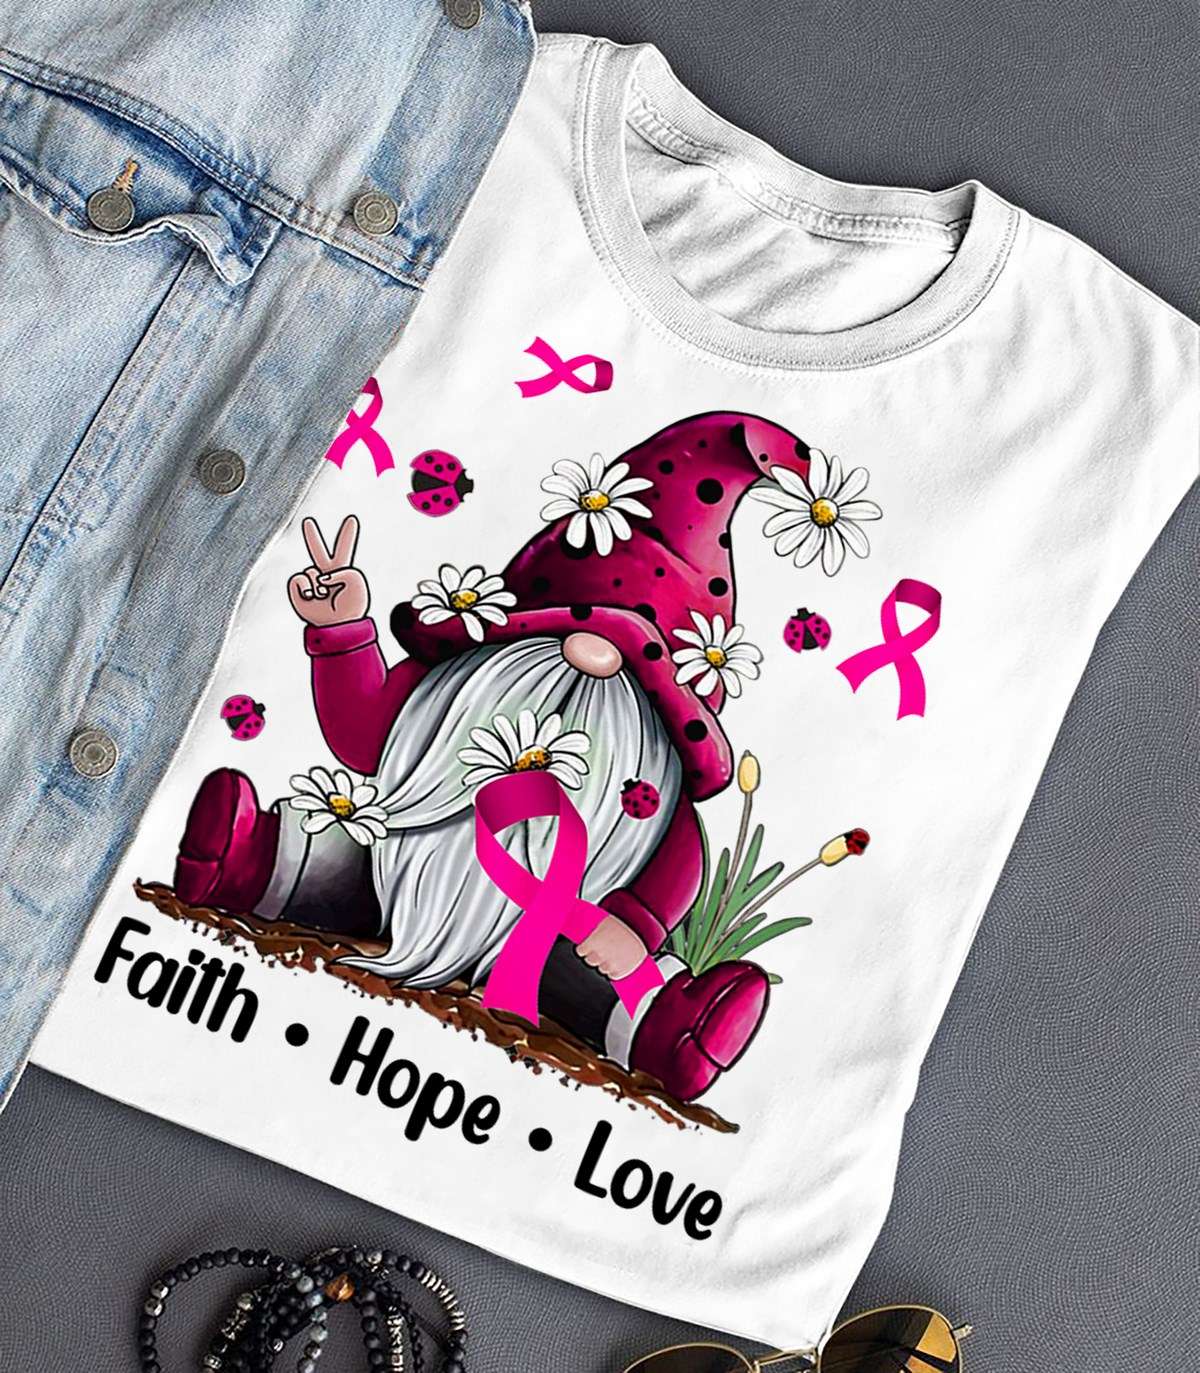 Faith hope love - Garden gnomies ribbon, cancer awareness T-shirt